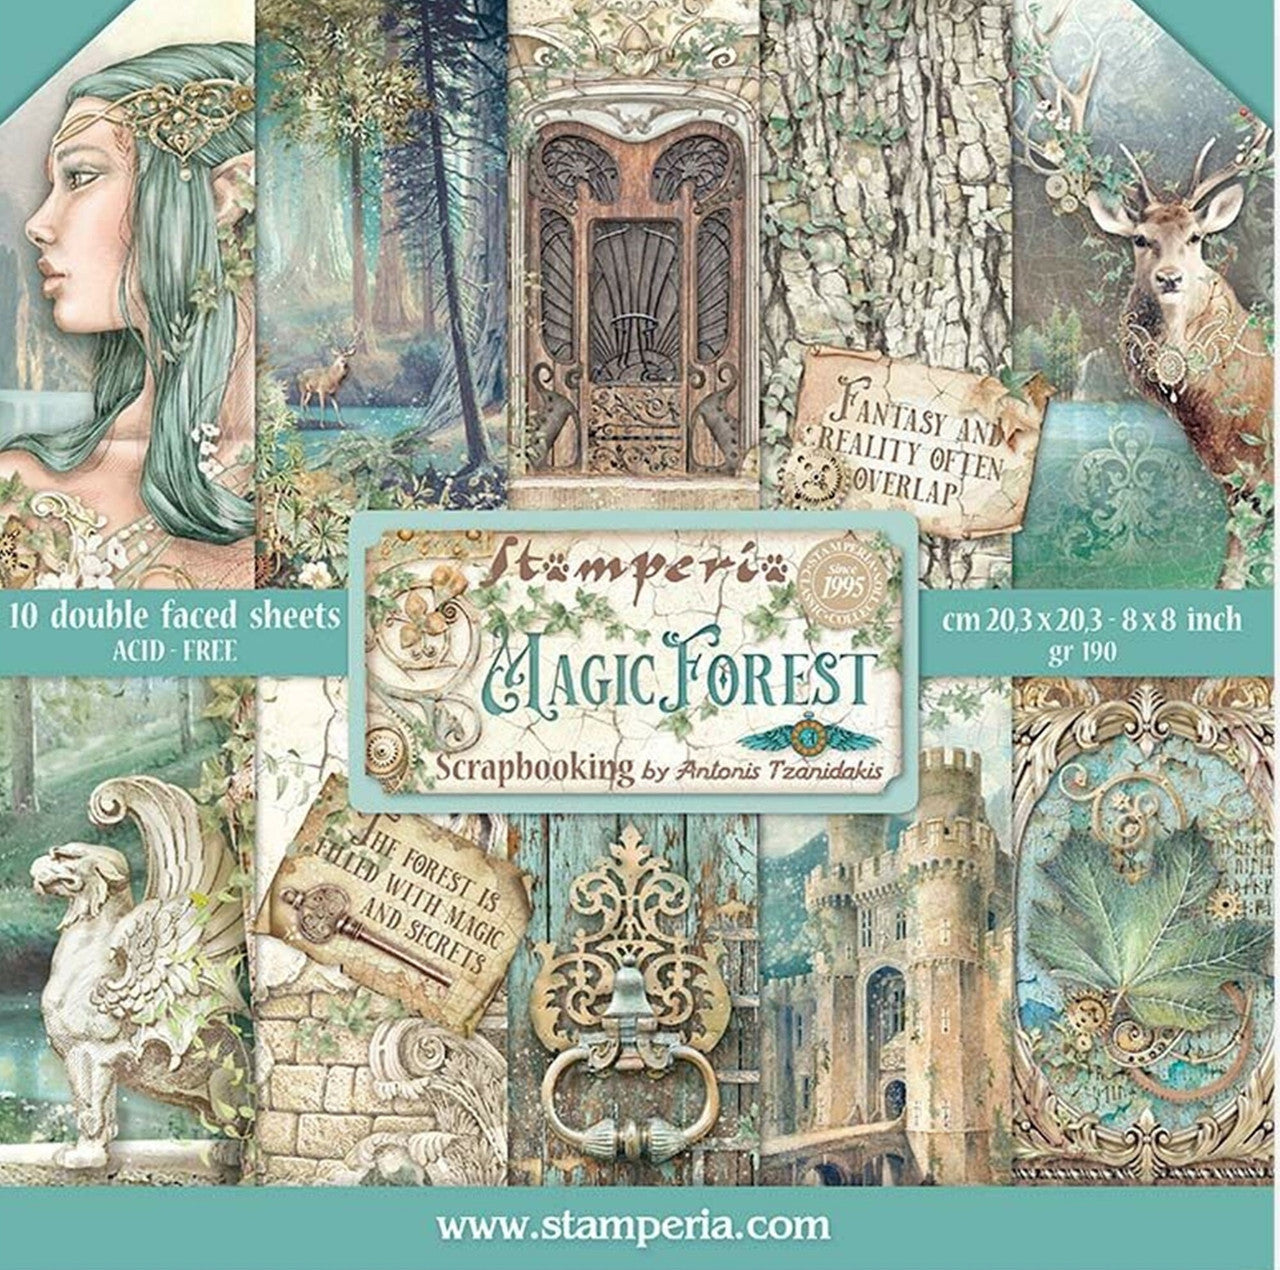 Colección de papel Stamperia Magic Forest de 8" x 8"